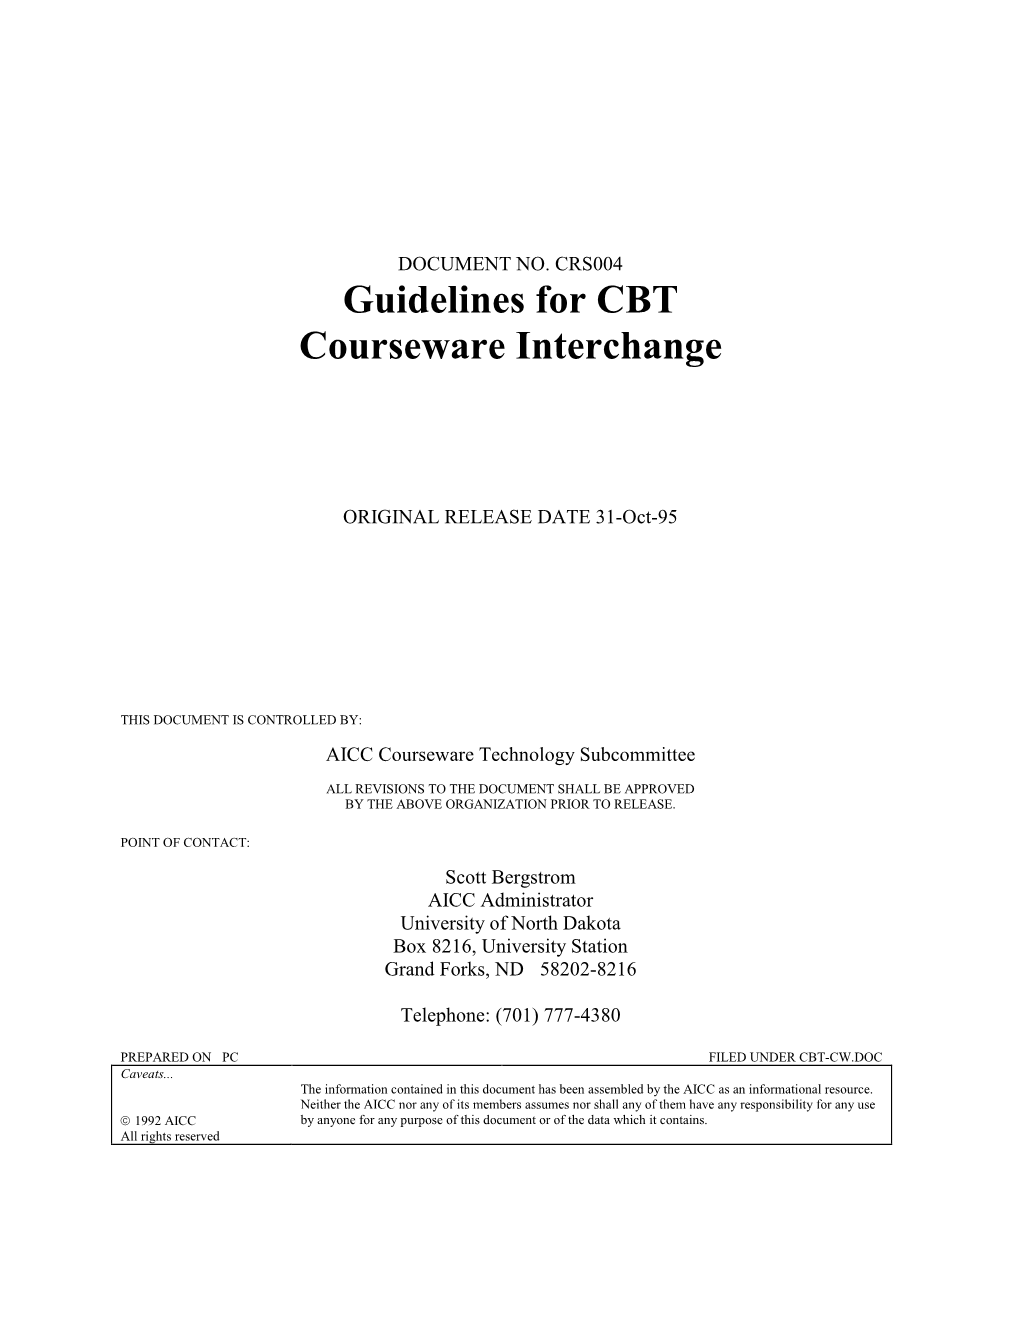 Guidelines for CBT Courseware Interchange